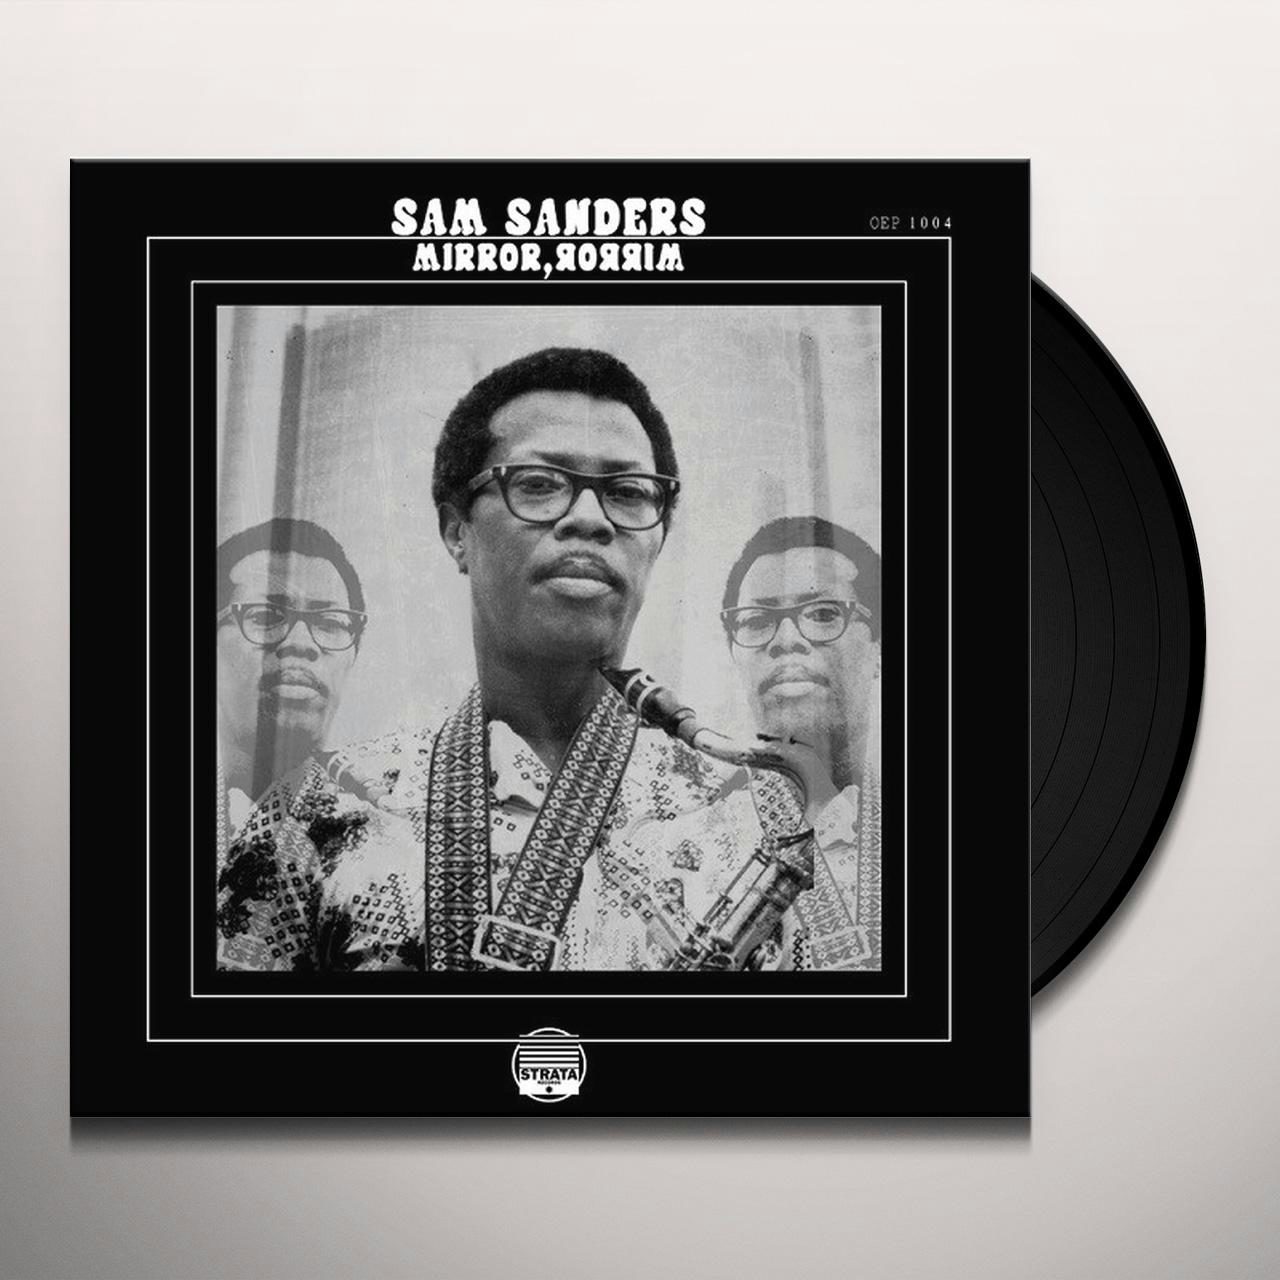 Mirror, Mirror Vinyl Record - Sam Sanders